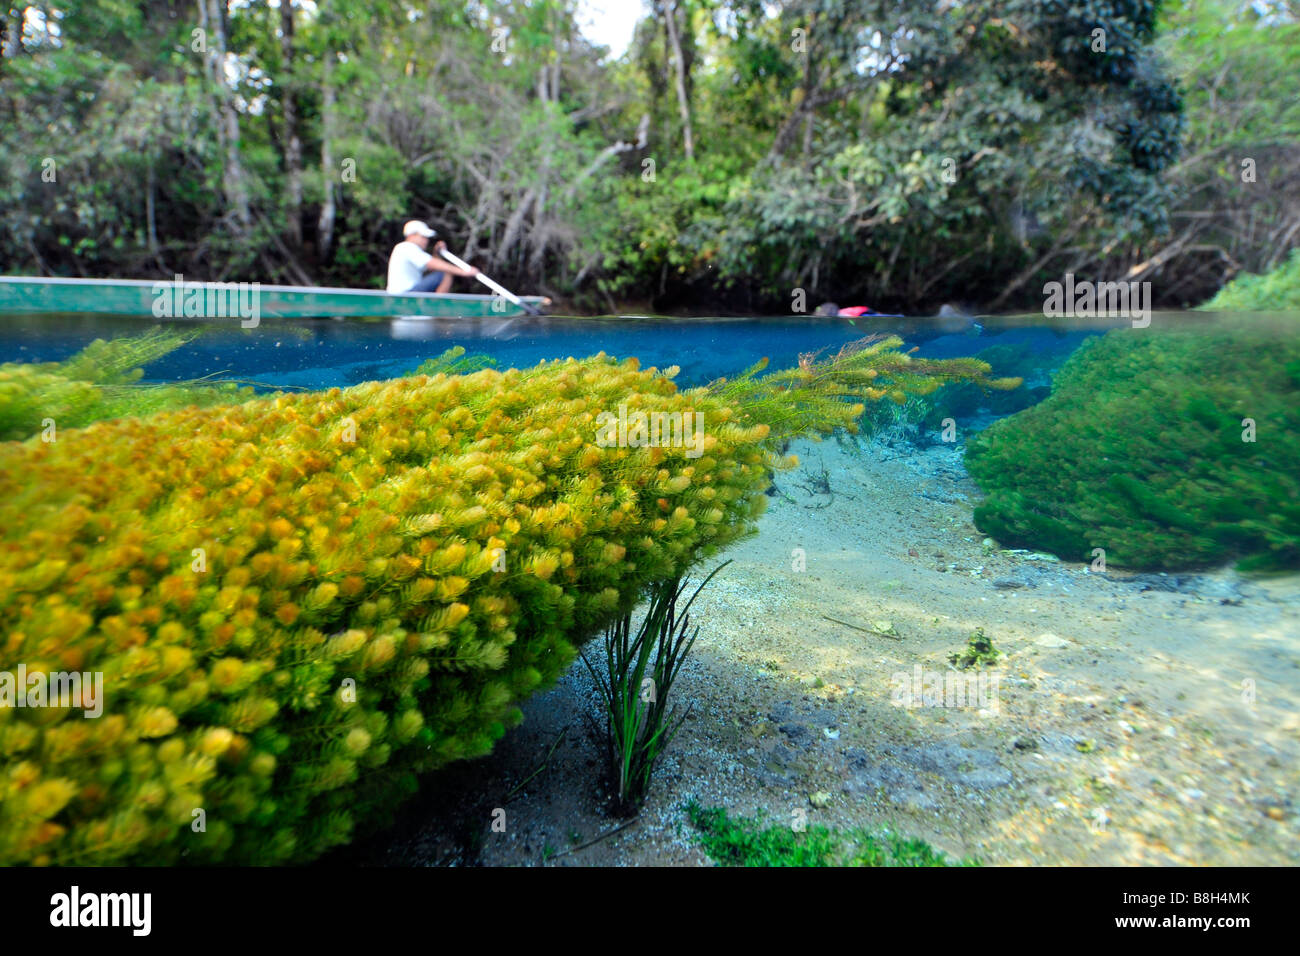 Man in a boat and Underwater vegetation predominantly stonewort algae Chara rusbyana at Sucuri River Bonito Brazil Stock Photo